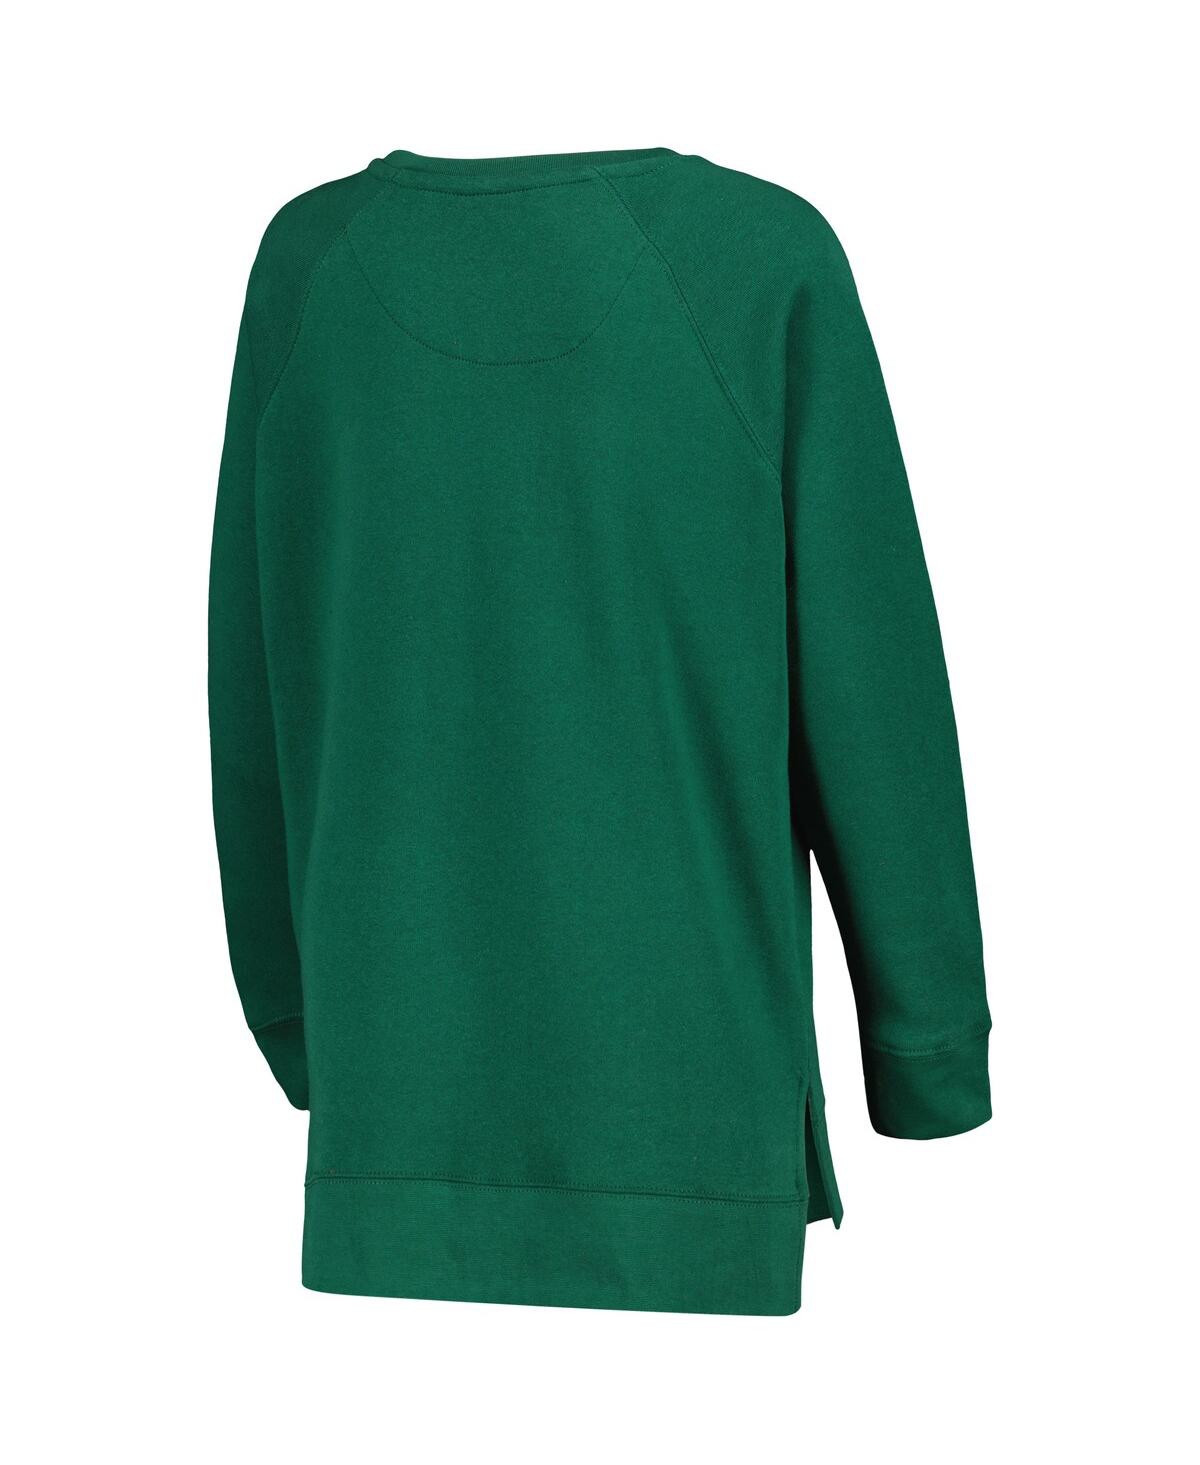 Shop Pressbox Women's  Green Oregon Ducks Steamboat Animal Print Raglan Pullover Sweatshirt